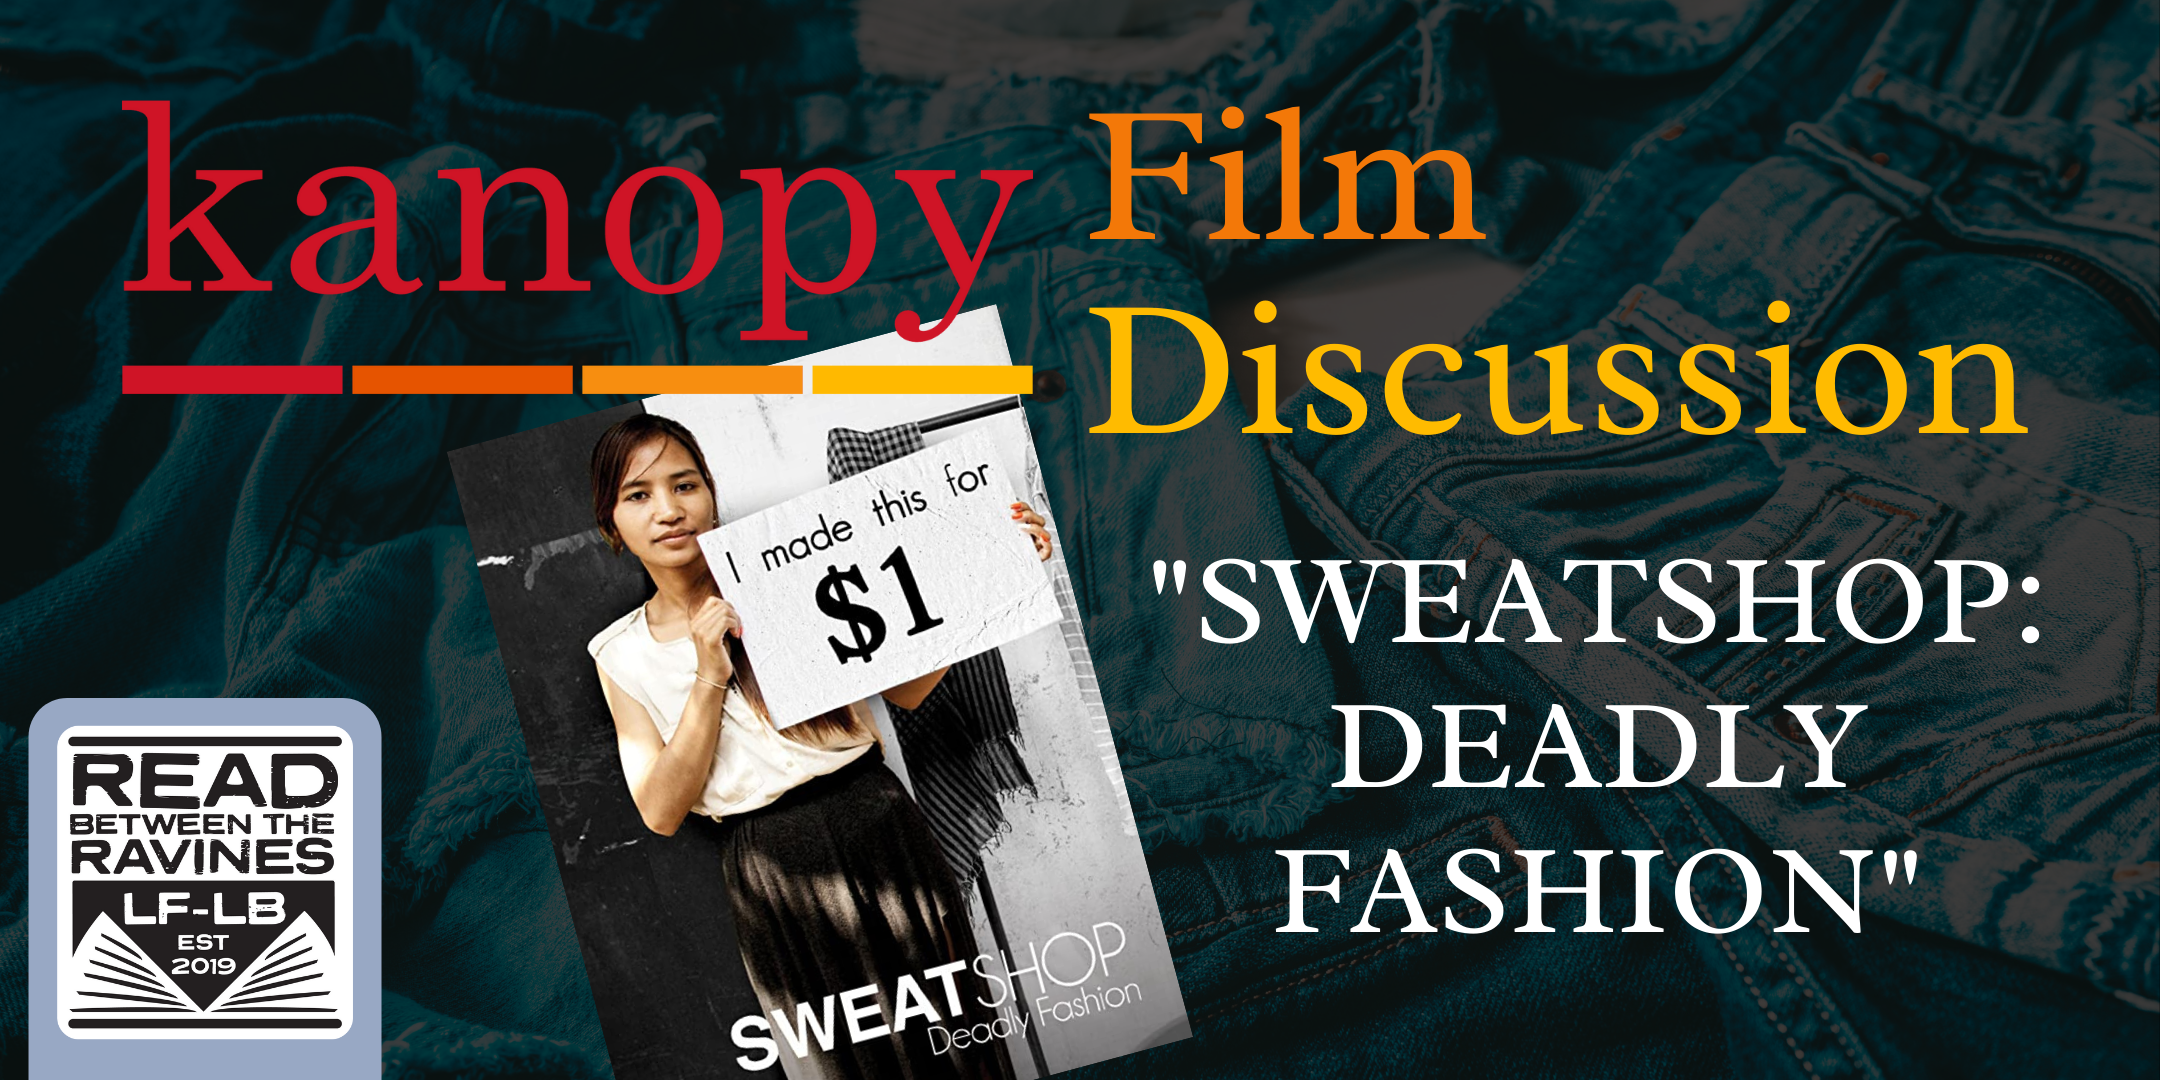 Kanopy Film Discussion: "Sweatshop: Deadly Fashion" image